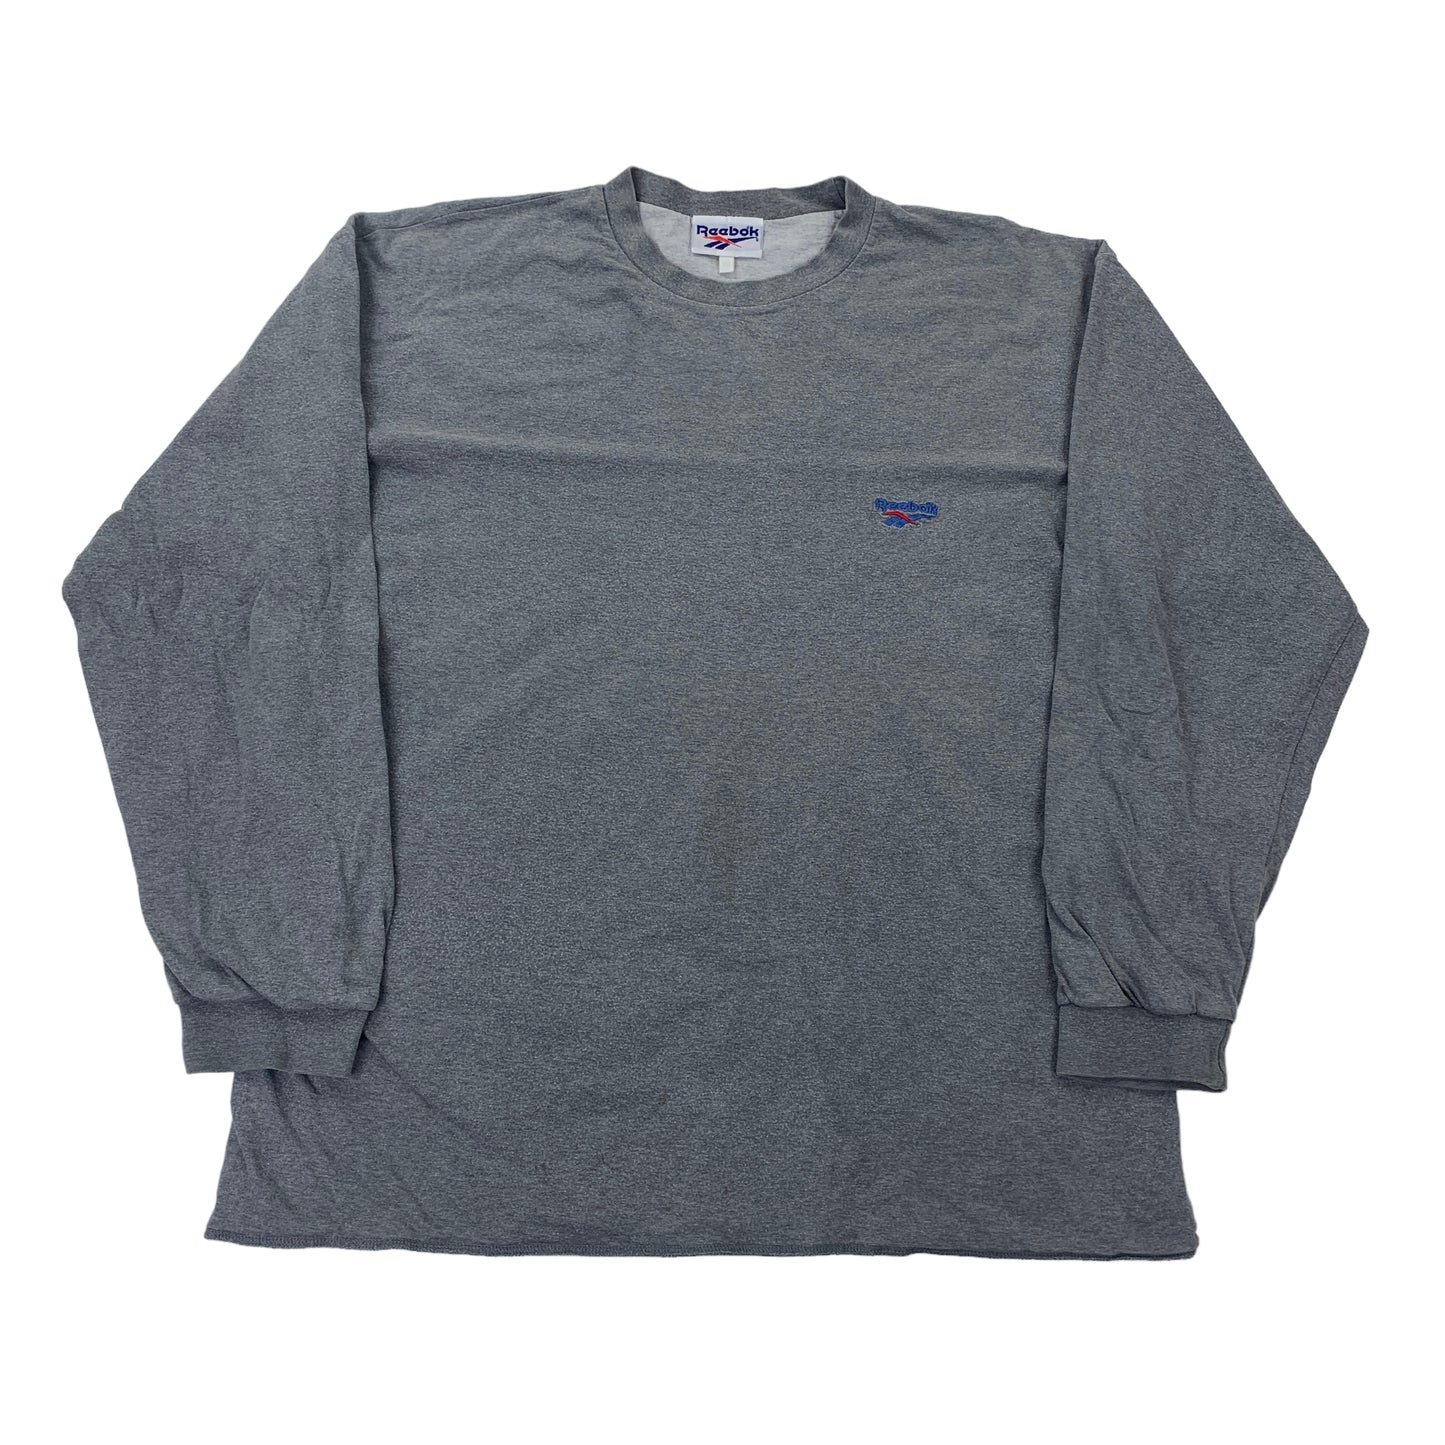 Reebok Sweater - XL